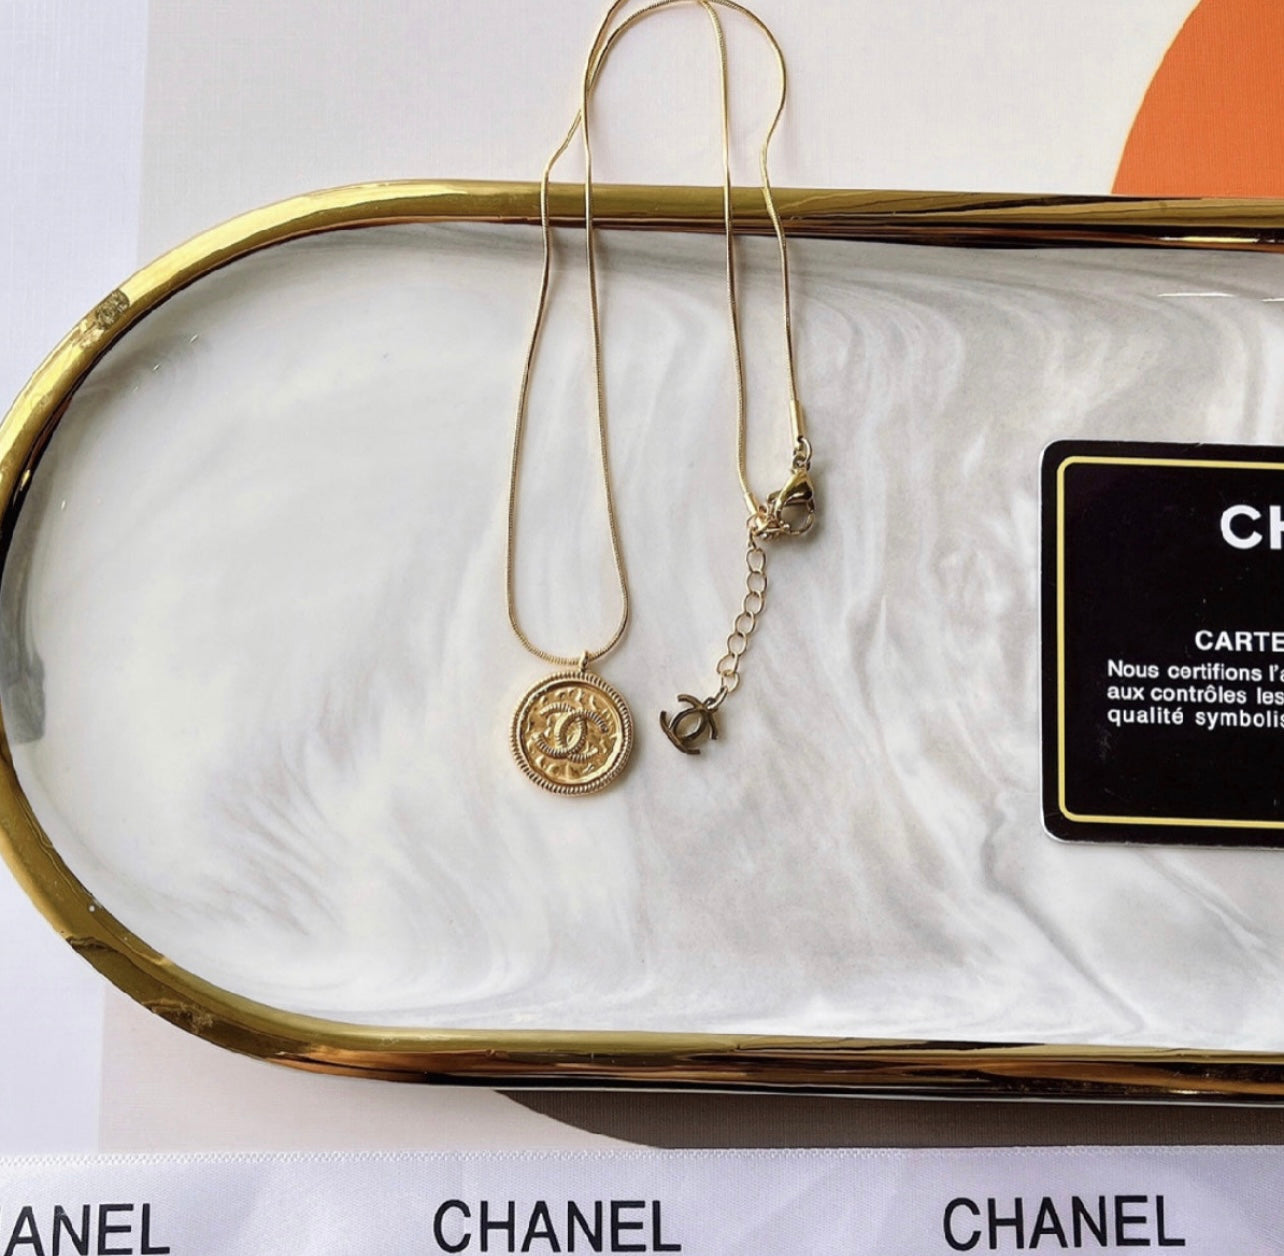 Chanel - Reworked Chanel Bracelet on Designer Wardrobe